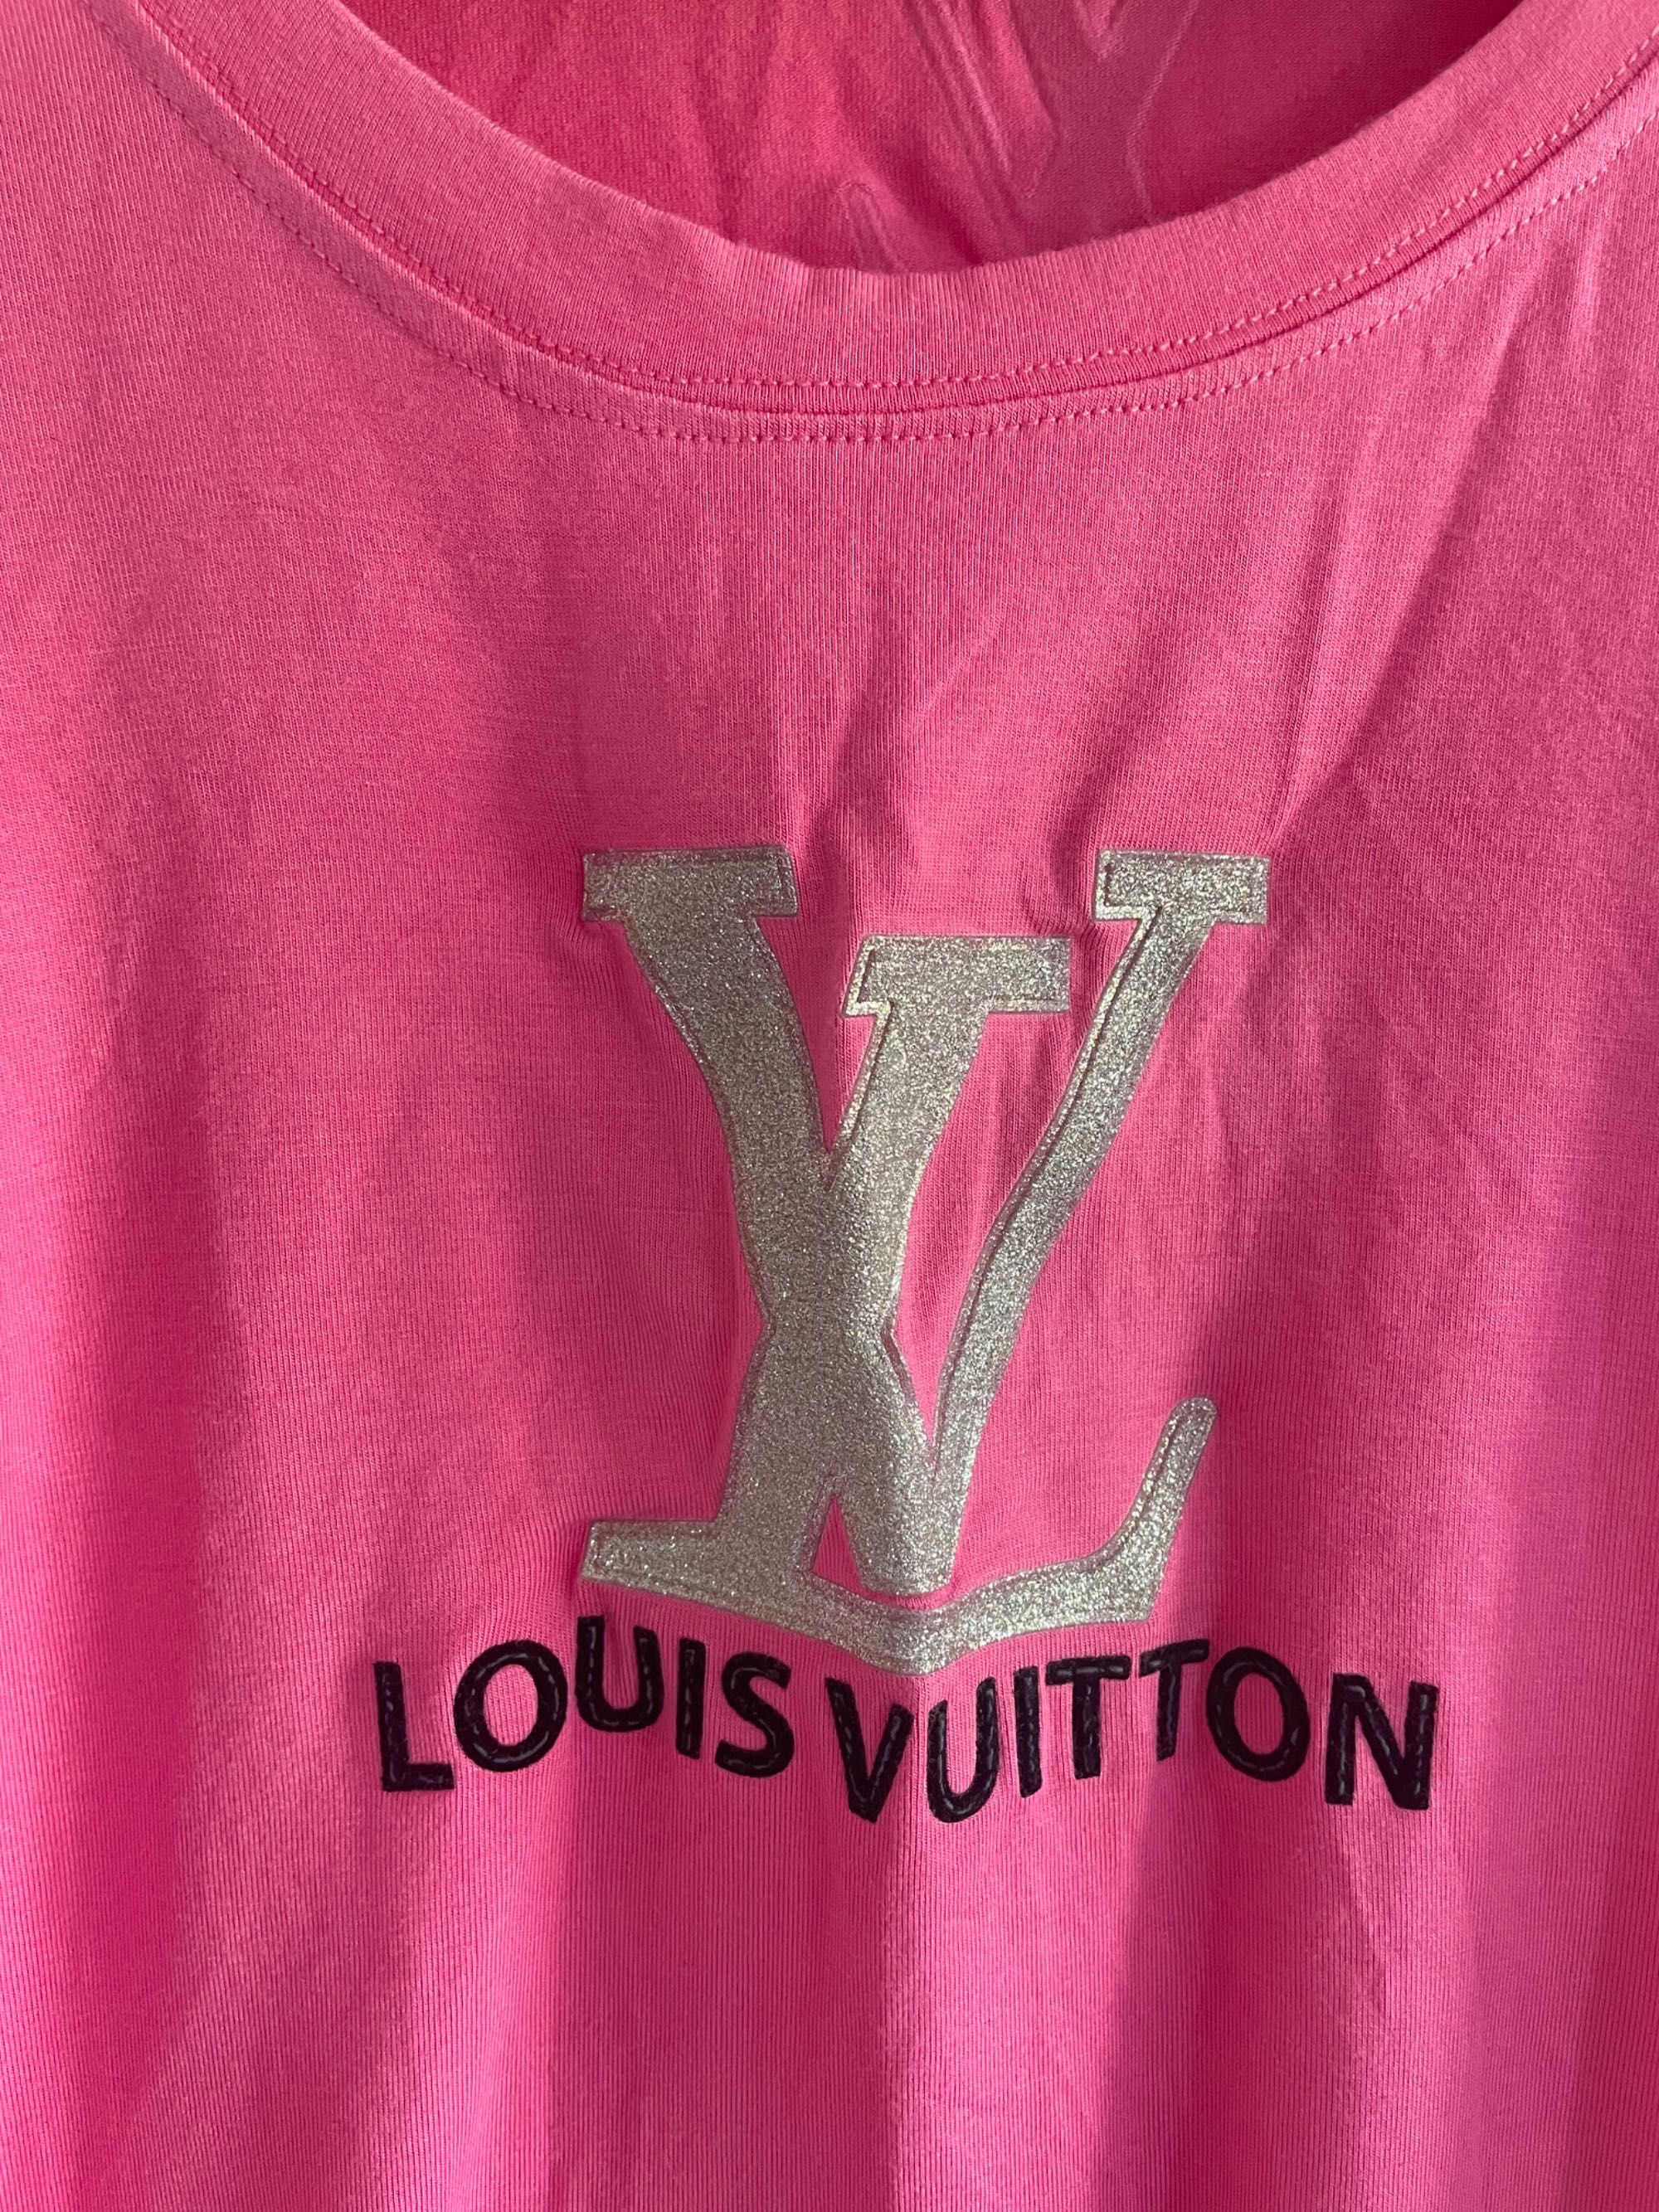 Koszulka damska z napisem Louis Vuitton